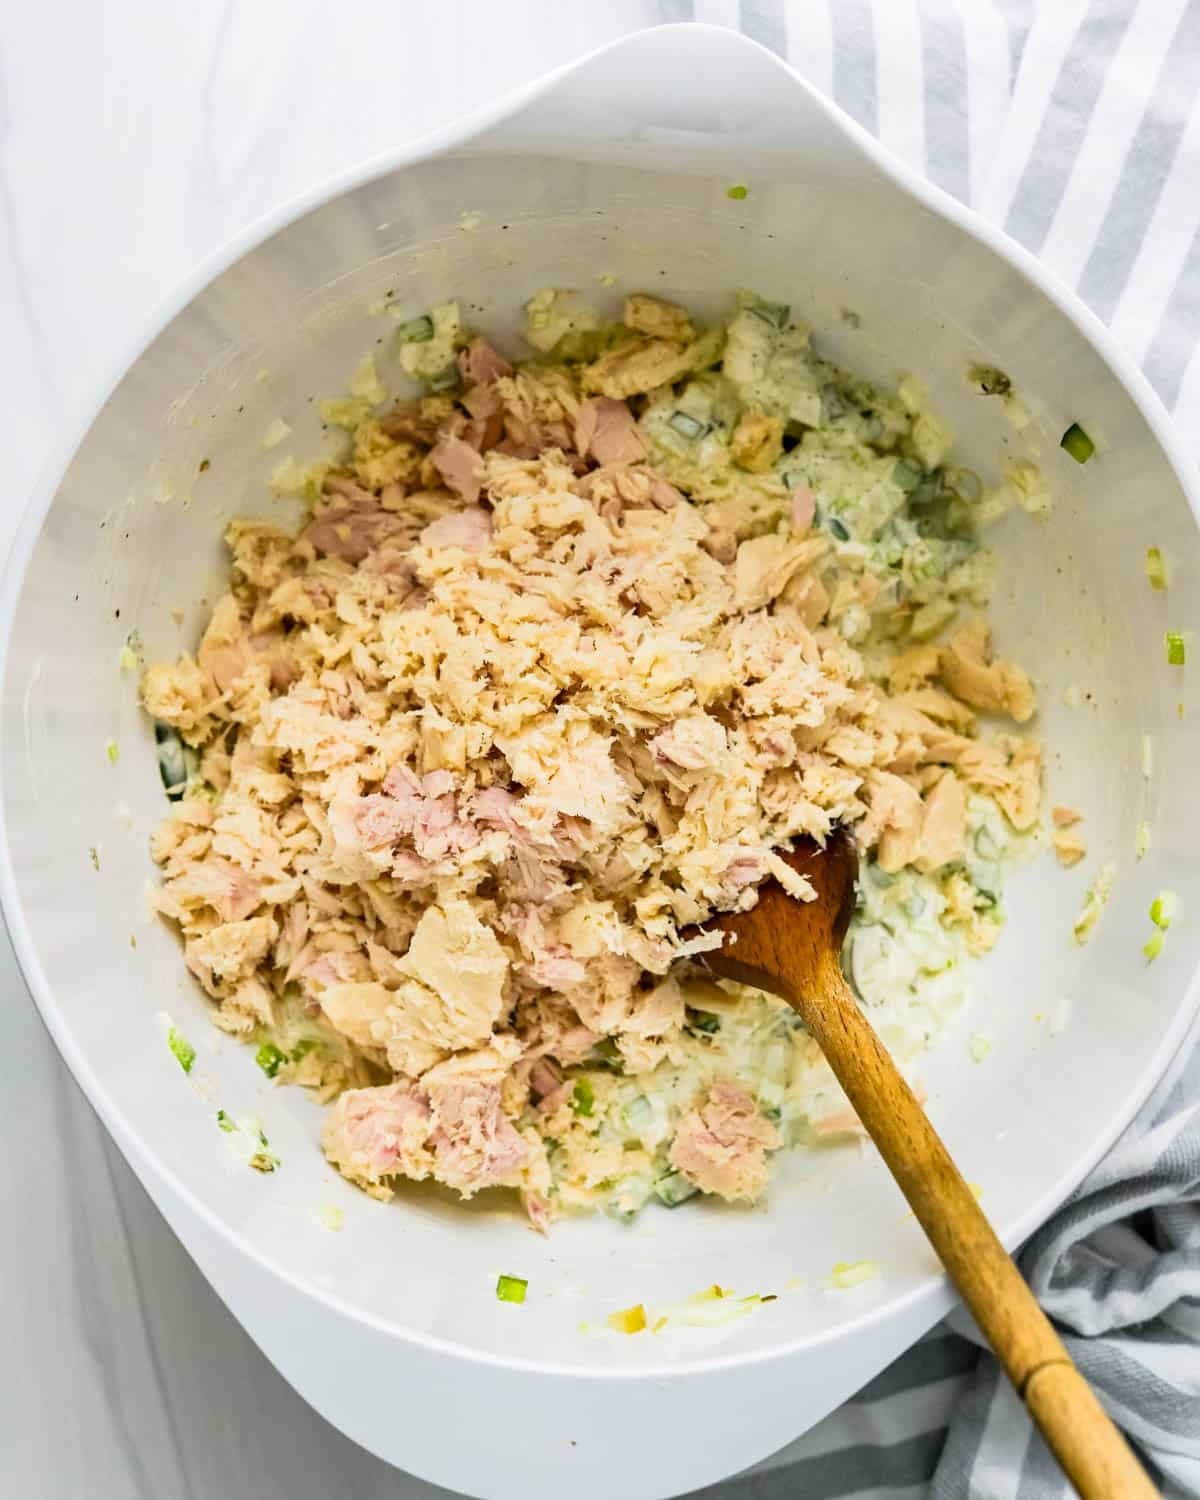 Adding flaked tuna fish to the mayonnaise mixture.